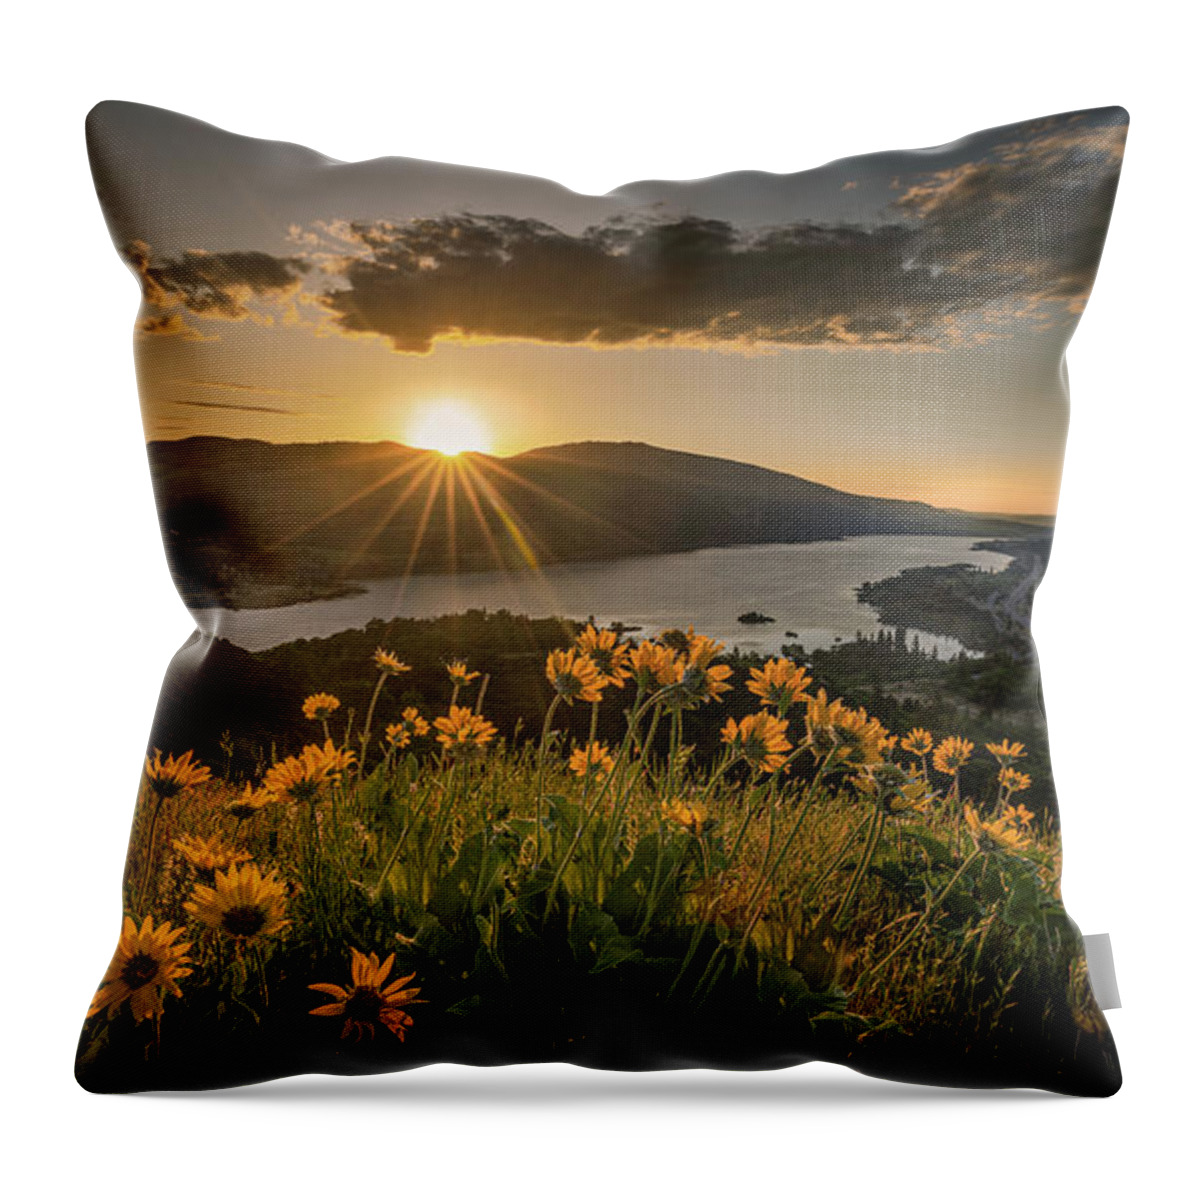 Columbia River Gorge Throw Pillow featuring the photograph Sunrise over Columbia River Gorge by Tim Bryan